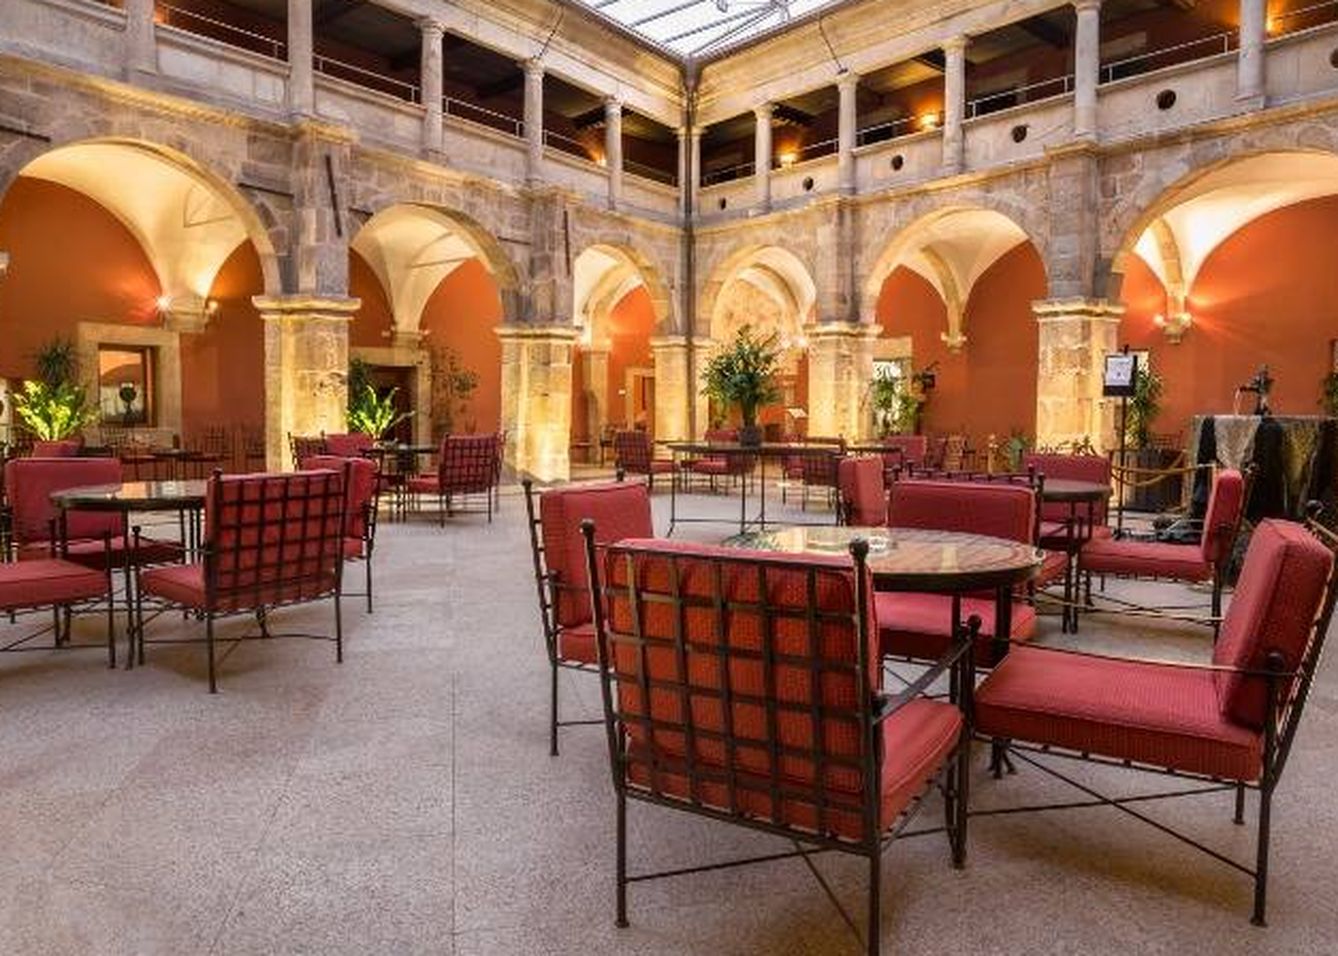 El hotel Izan de Trujillo conserva la arquitectura del siglo XVI